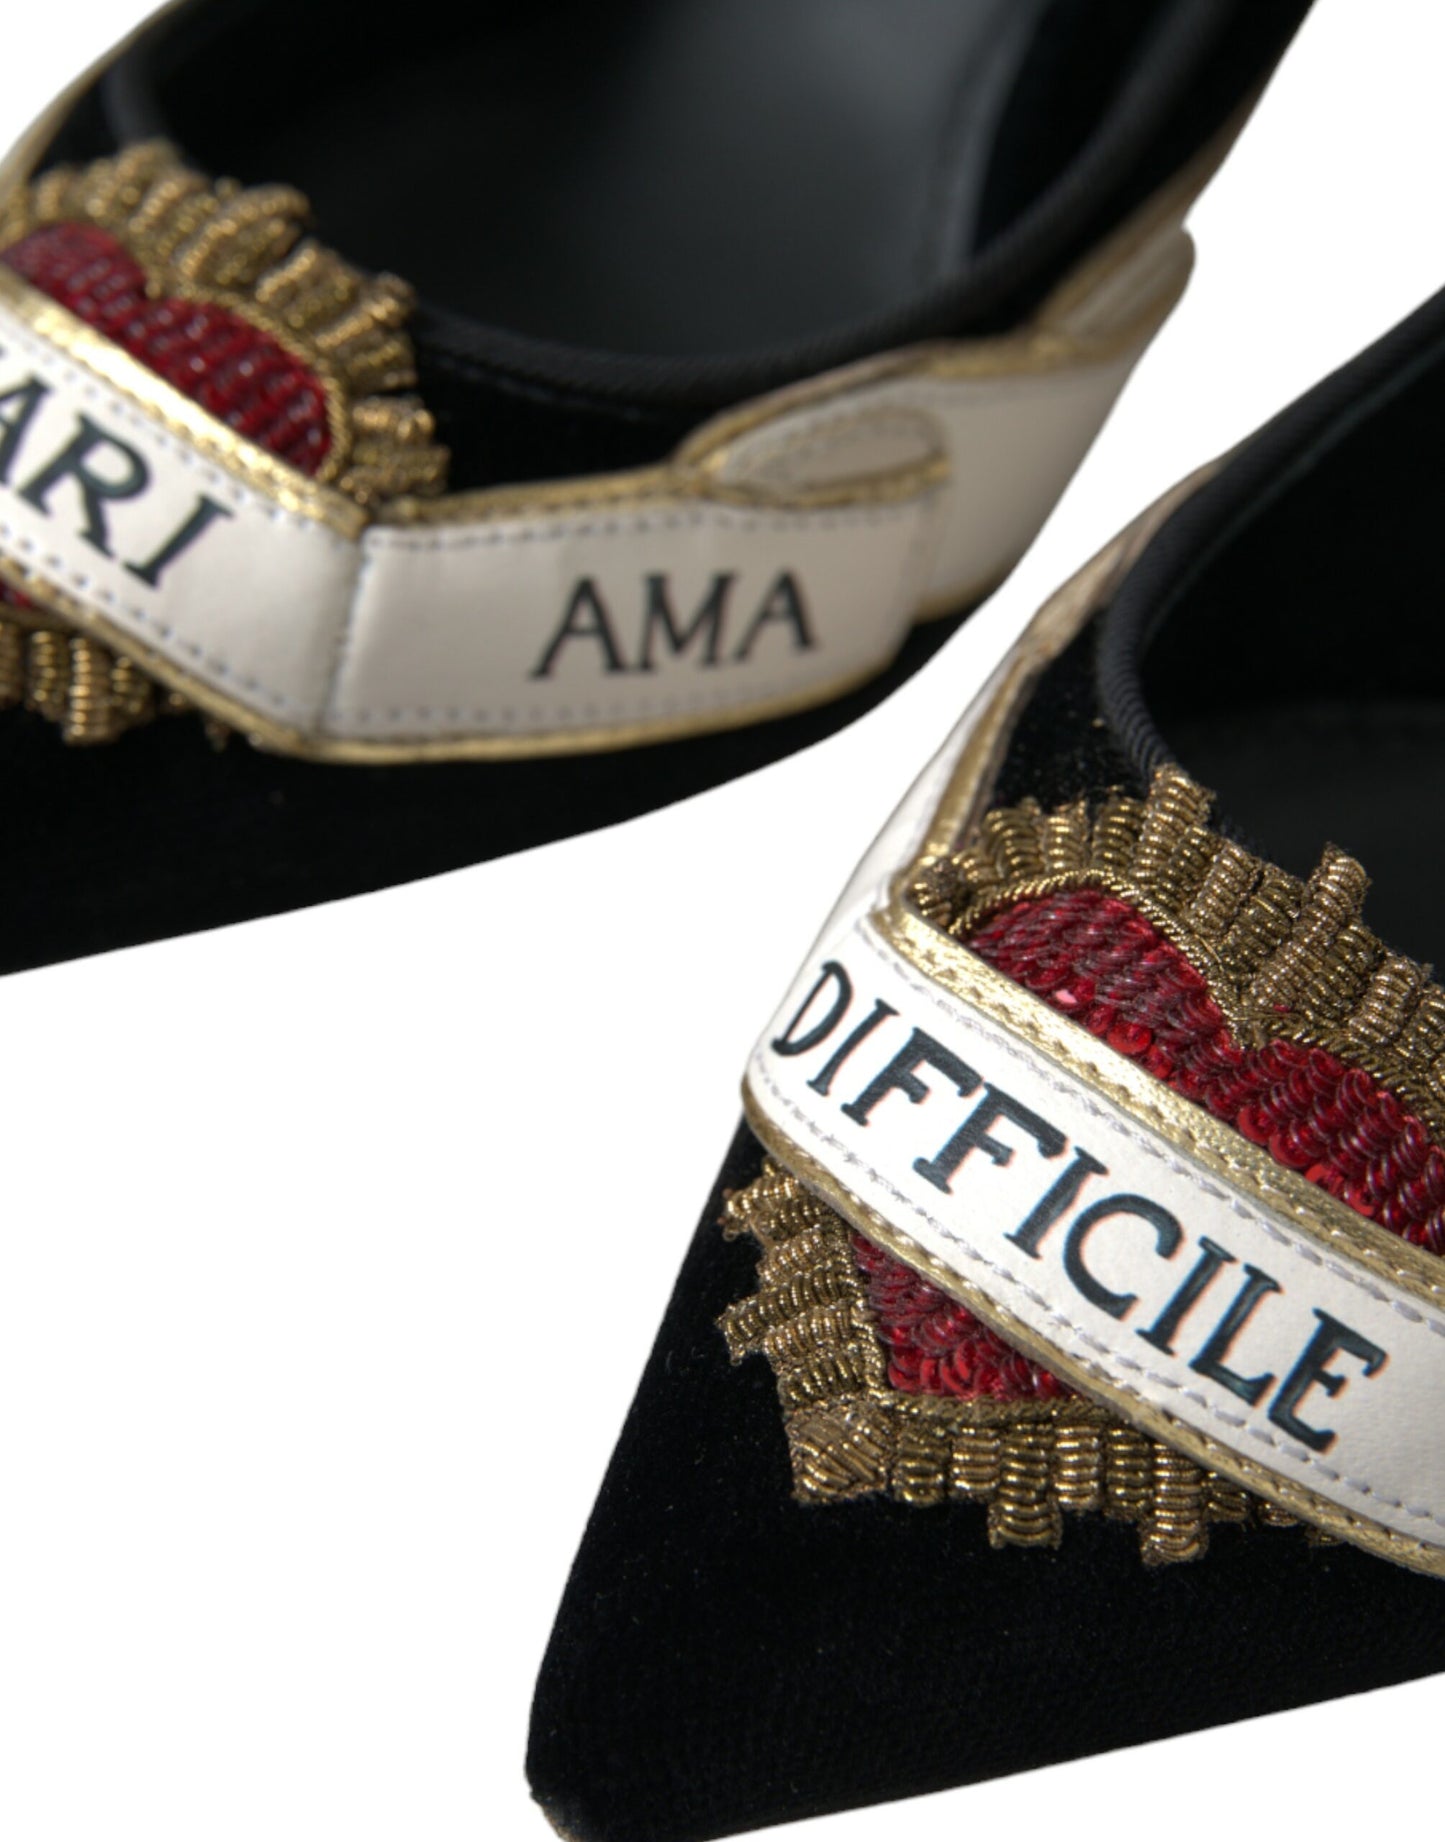 Black Suede Leather Amari Heels Pumps Shoes